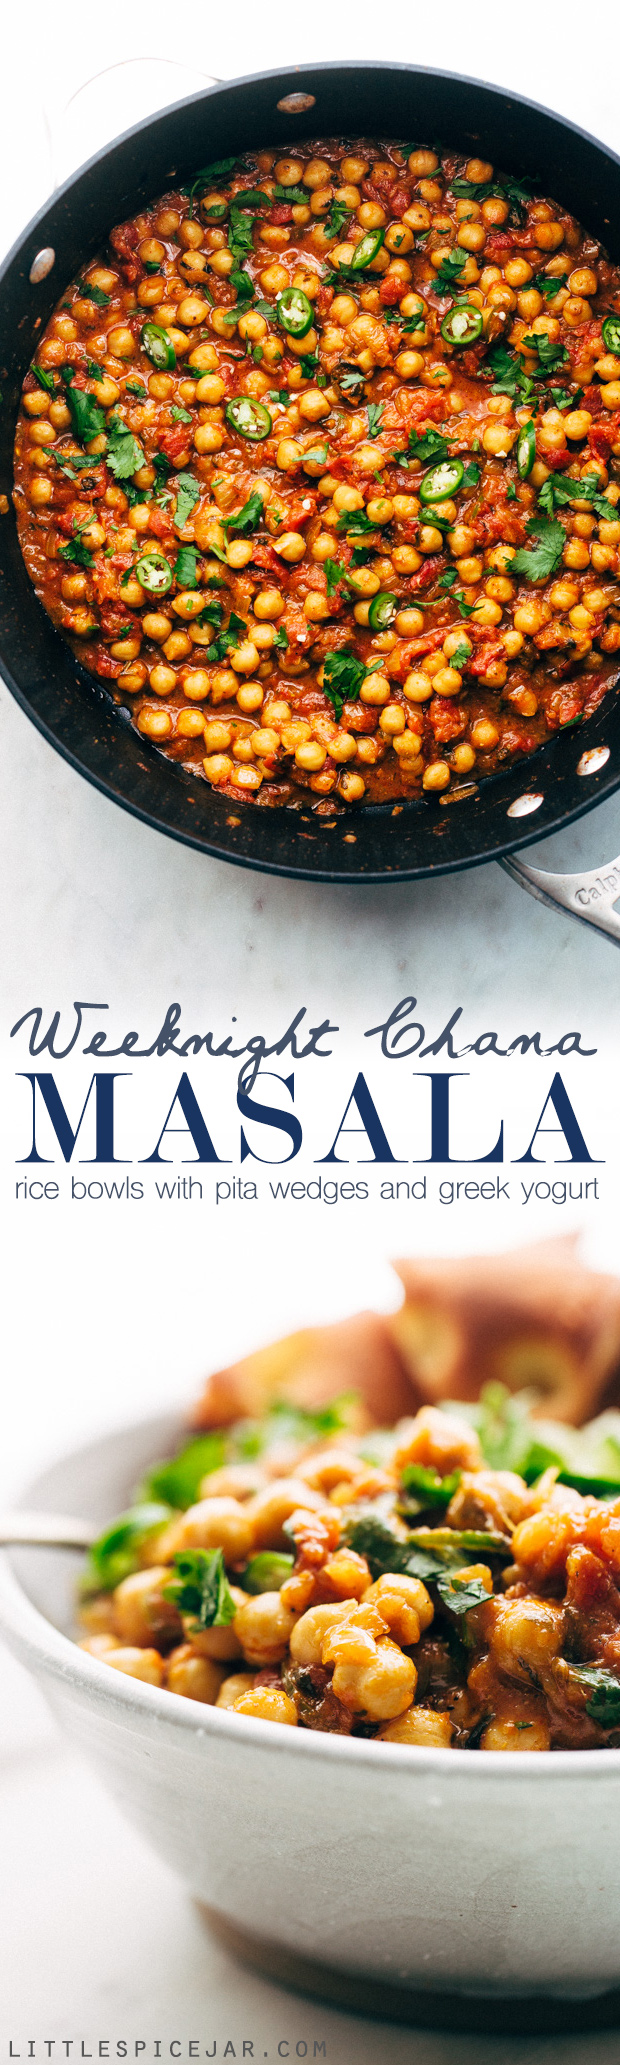 Weeknight Chana Masala Rice Bowls - A quick weeknight take on the traditional Chana Masala! Serve over basmati rice and it's the perfect warm and cozy winter meal! #chanamasala #indianfood #chana #vegan | Littlespicejar.com